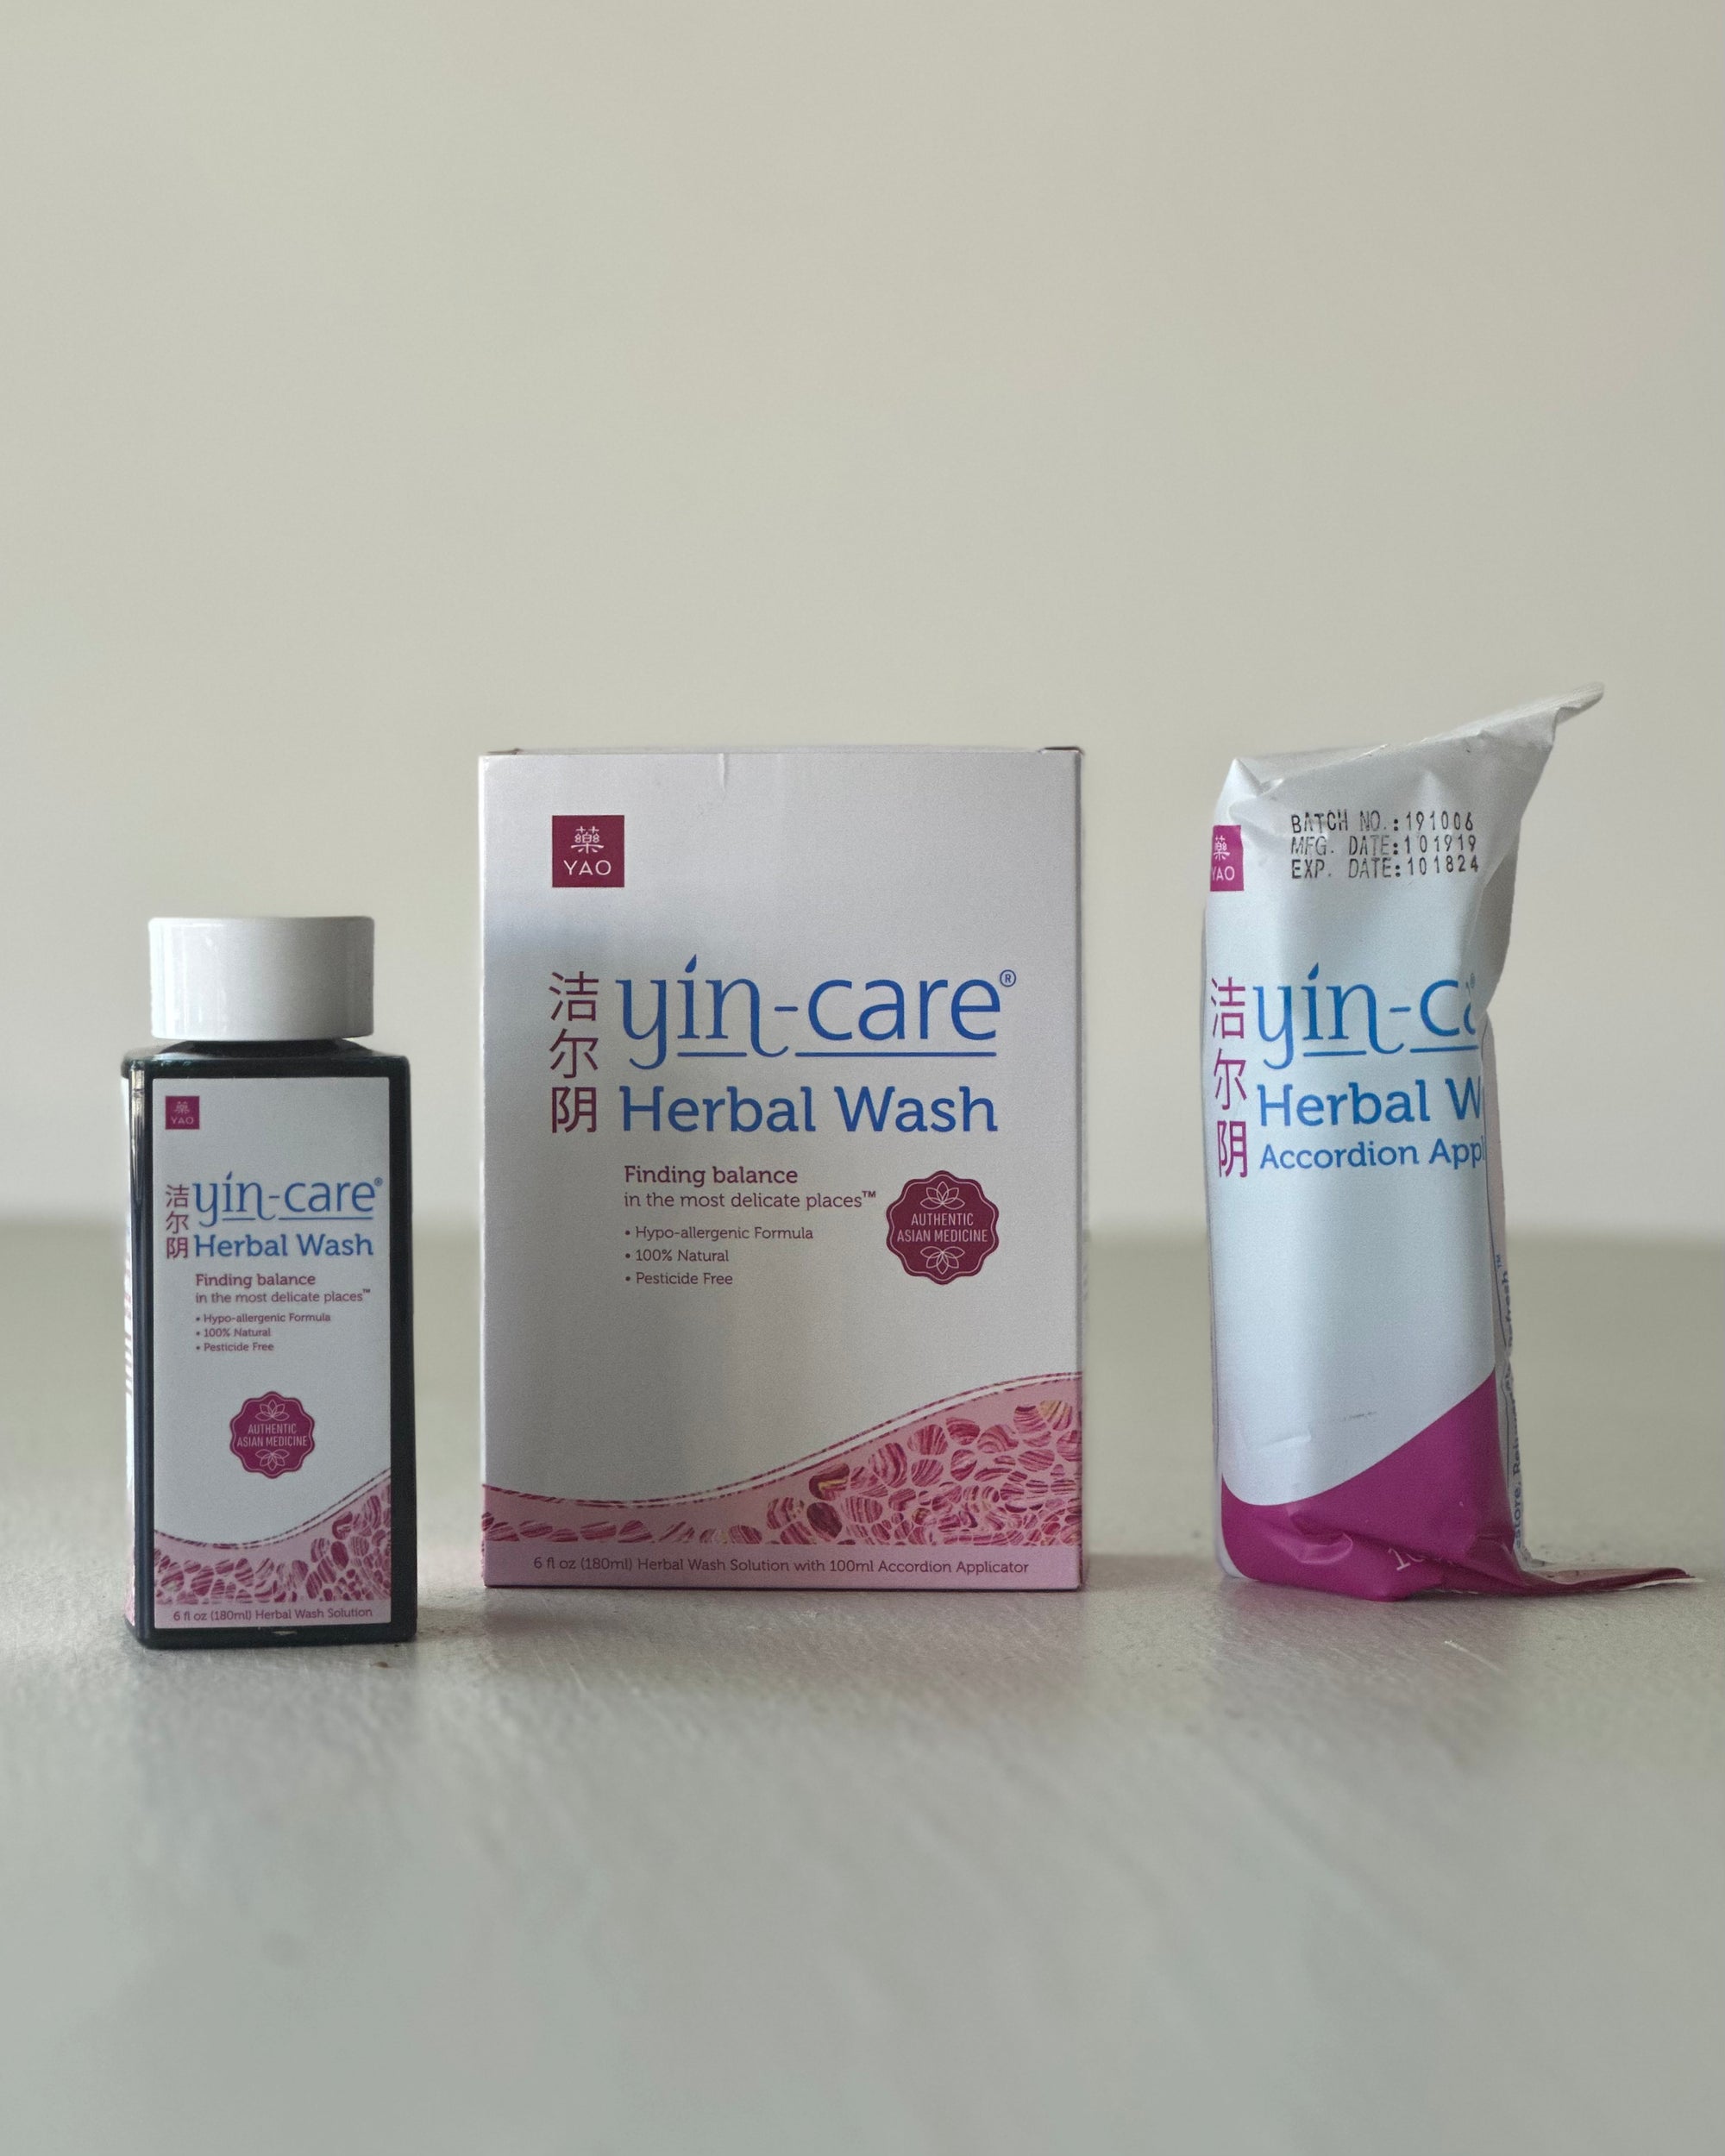 Yin-care® Herbal Wash & Applicator Combo Kit